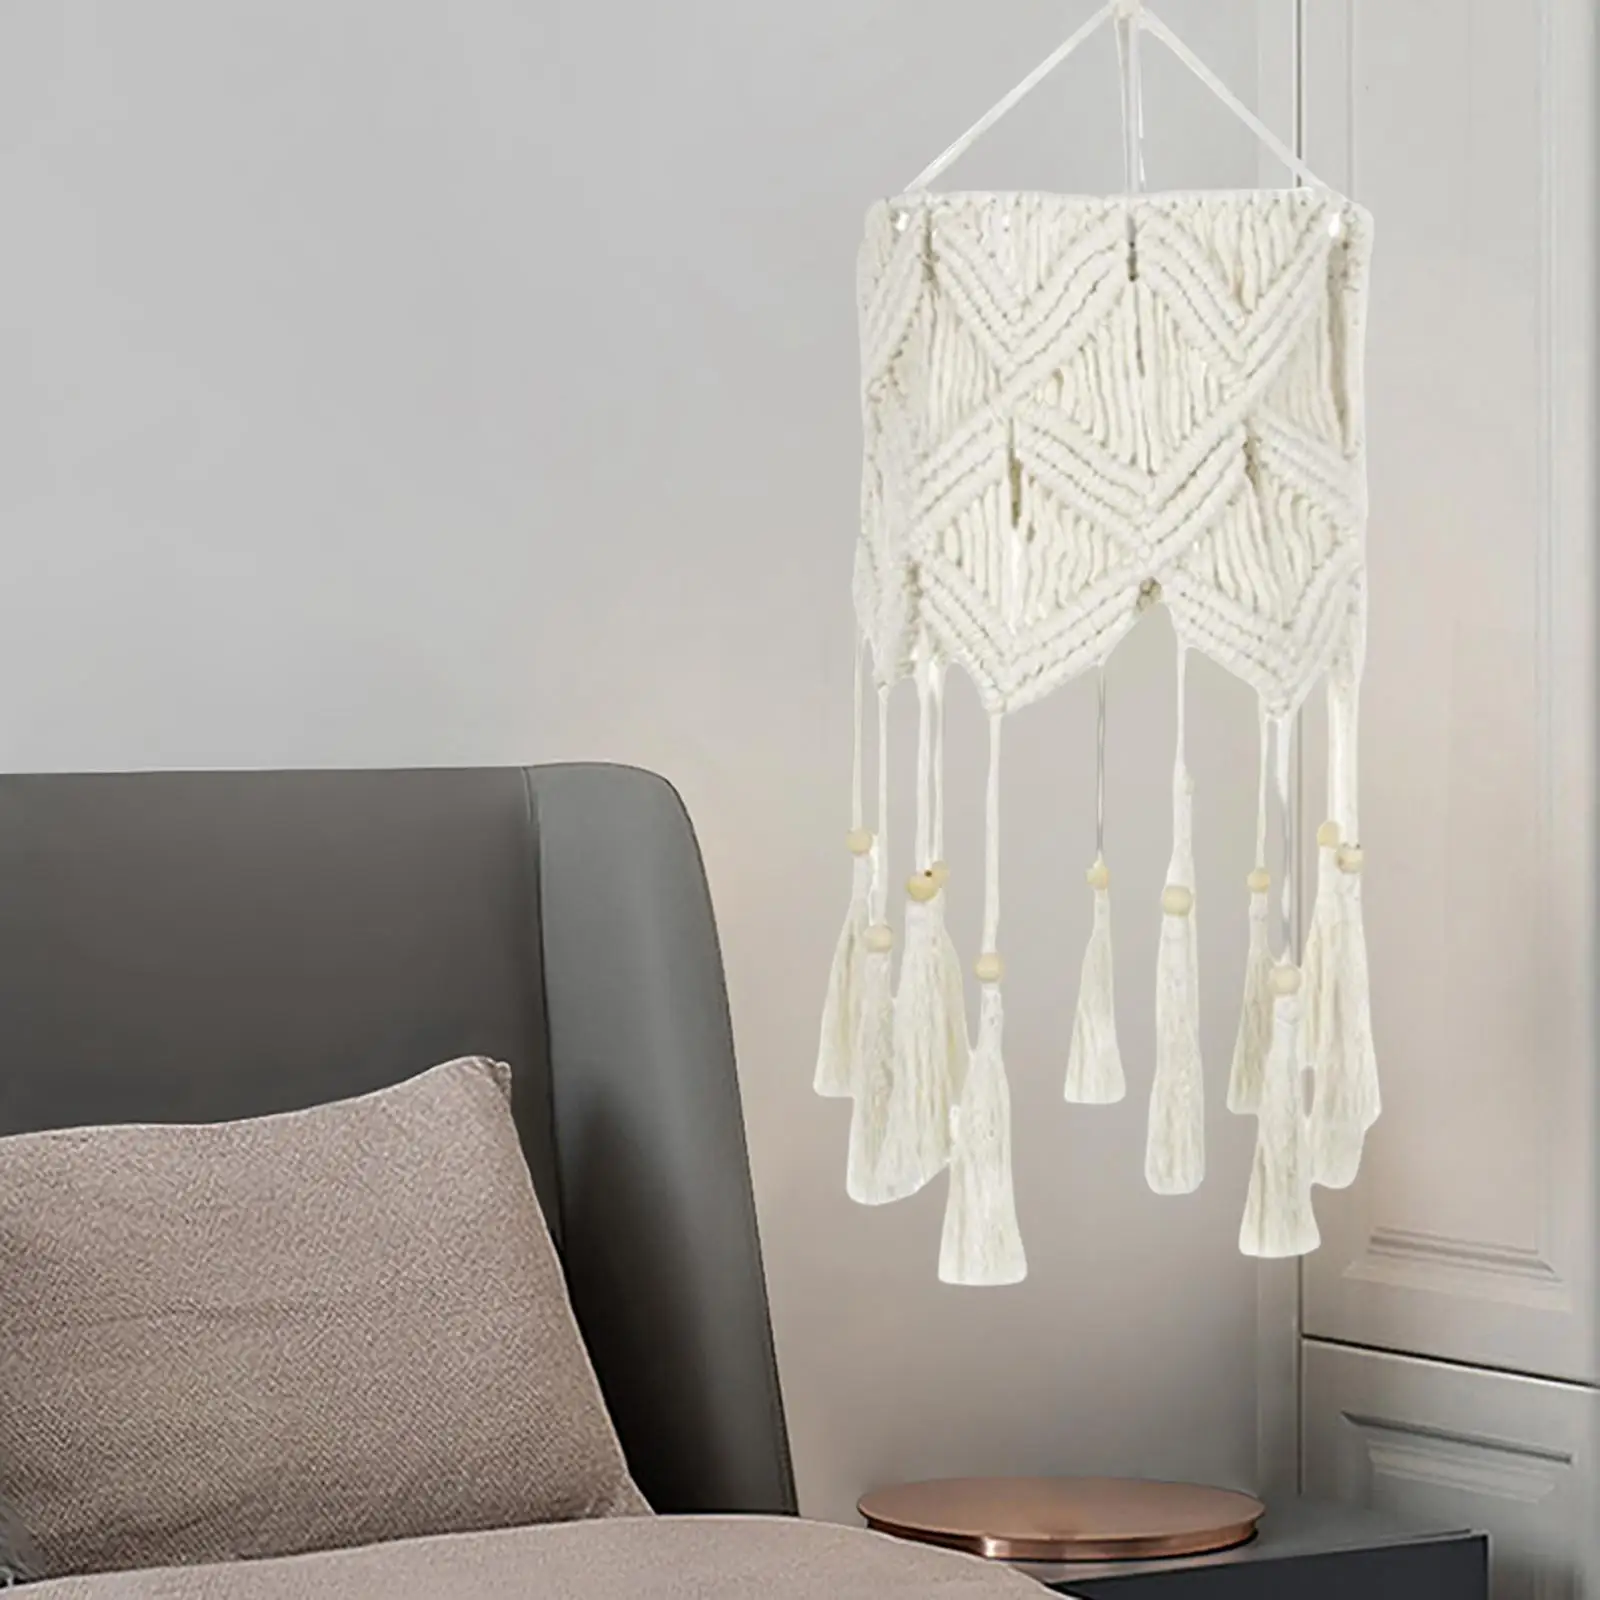 Handmade Macrame Lampshade Boho Hanging Pendant Light Cover Ceiling Light Shade Fitting for Office Home Dorm Room Ornaments